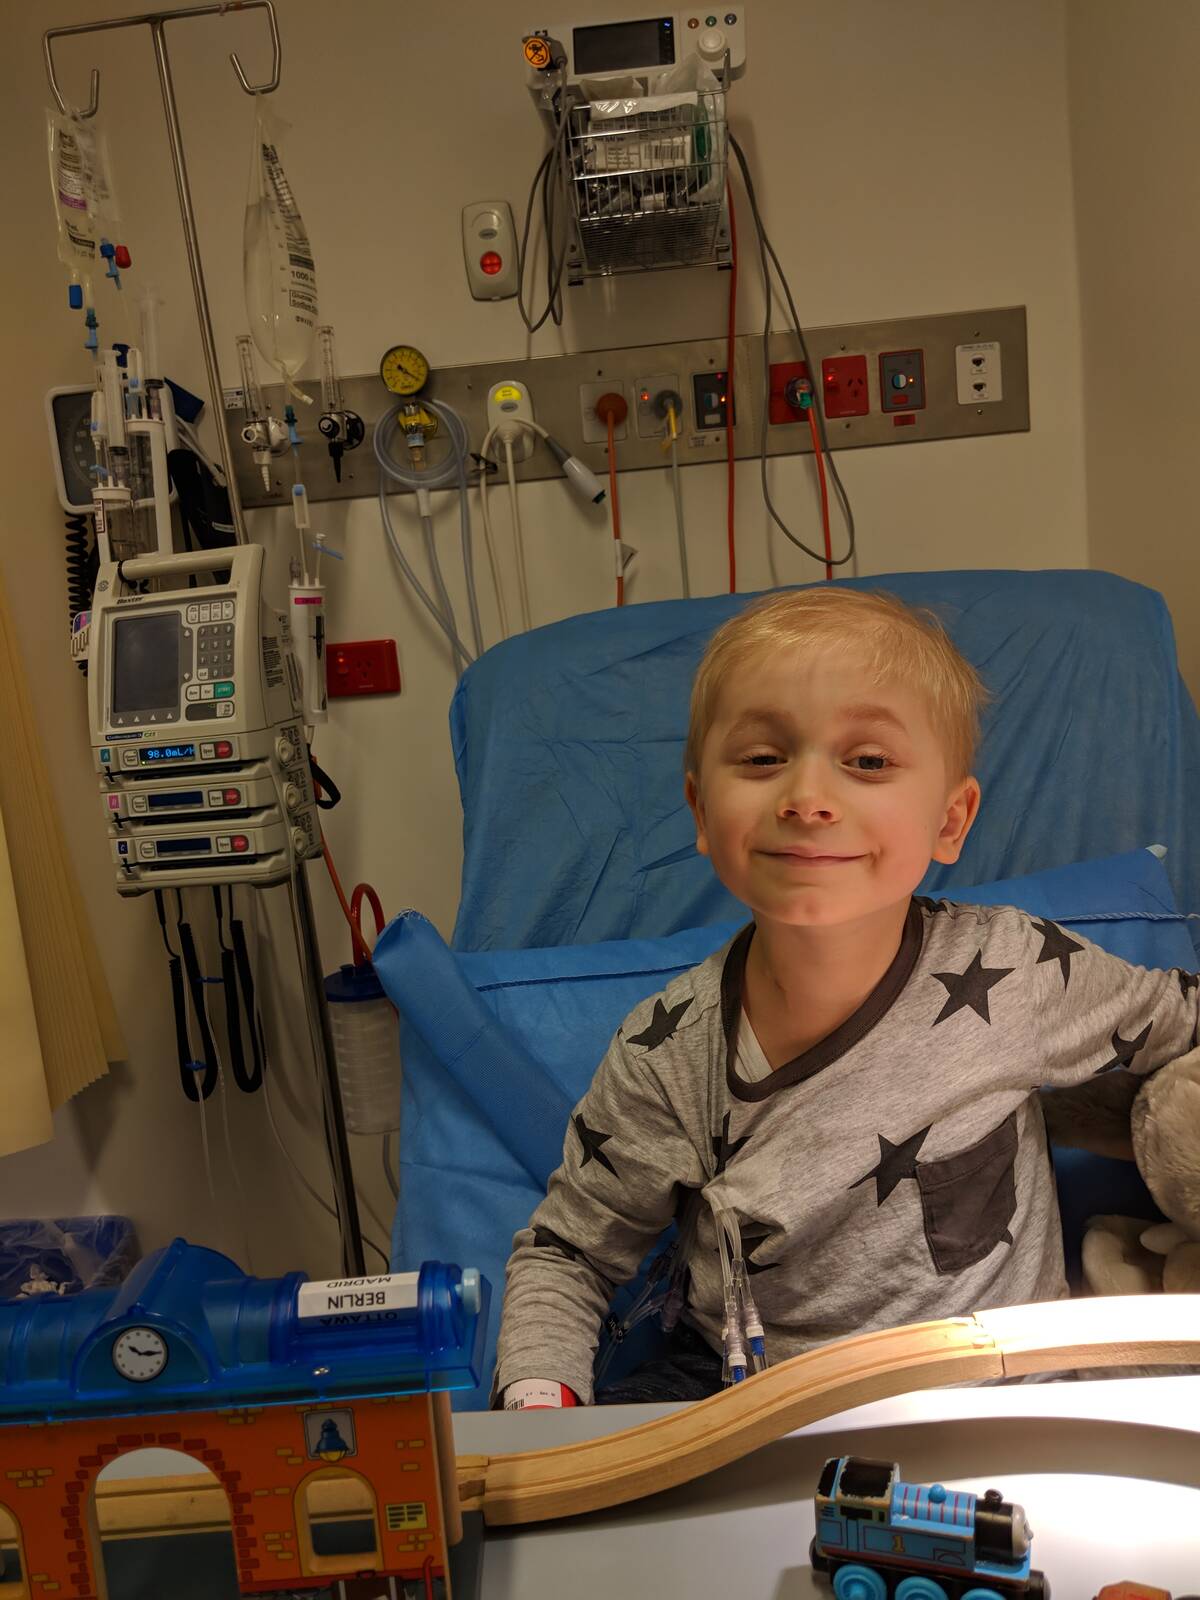 Make-A-Wish Australia wish kid Zach in hospital during treatment